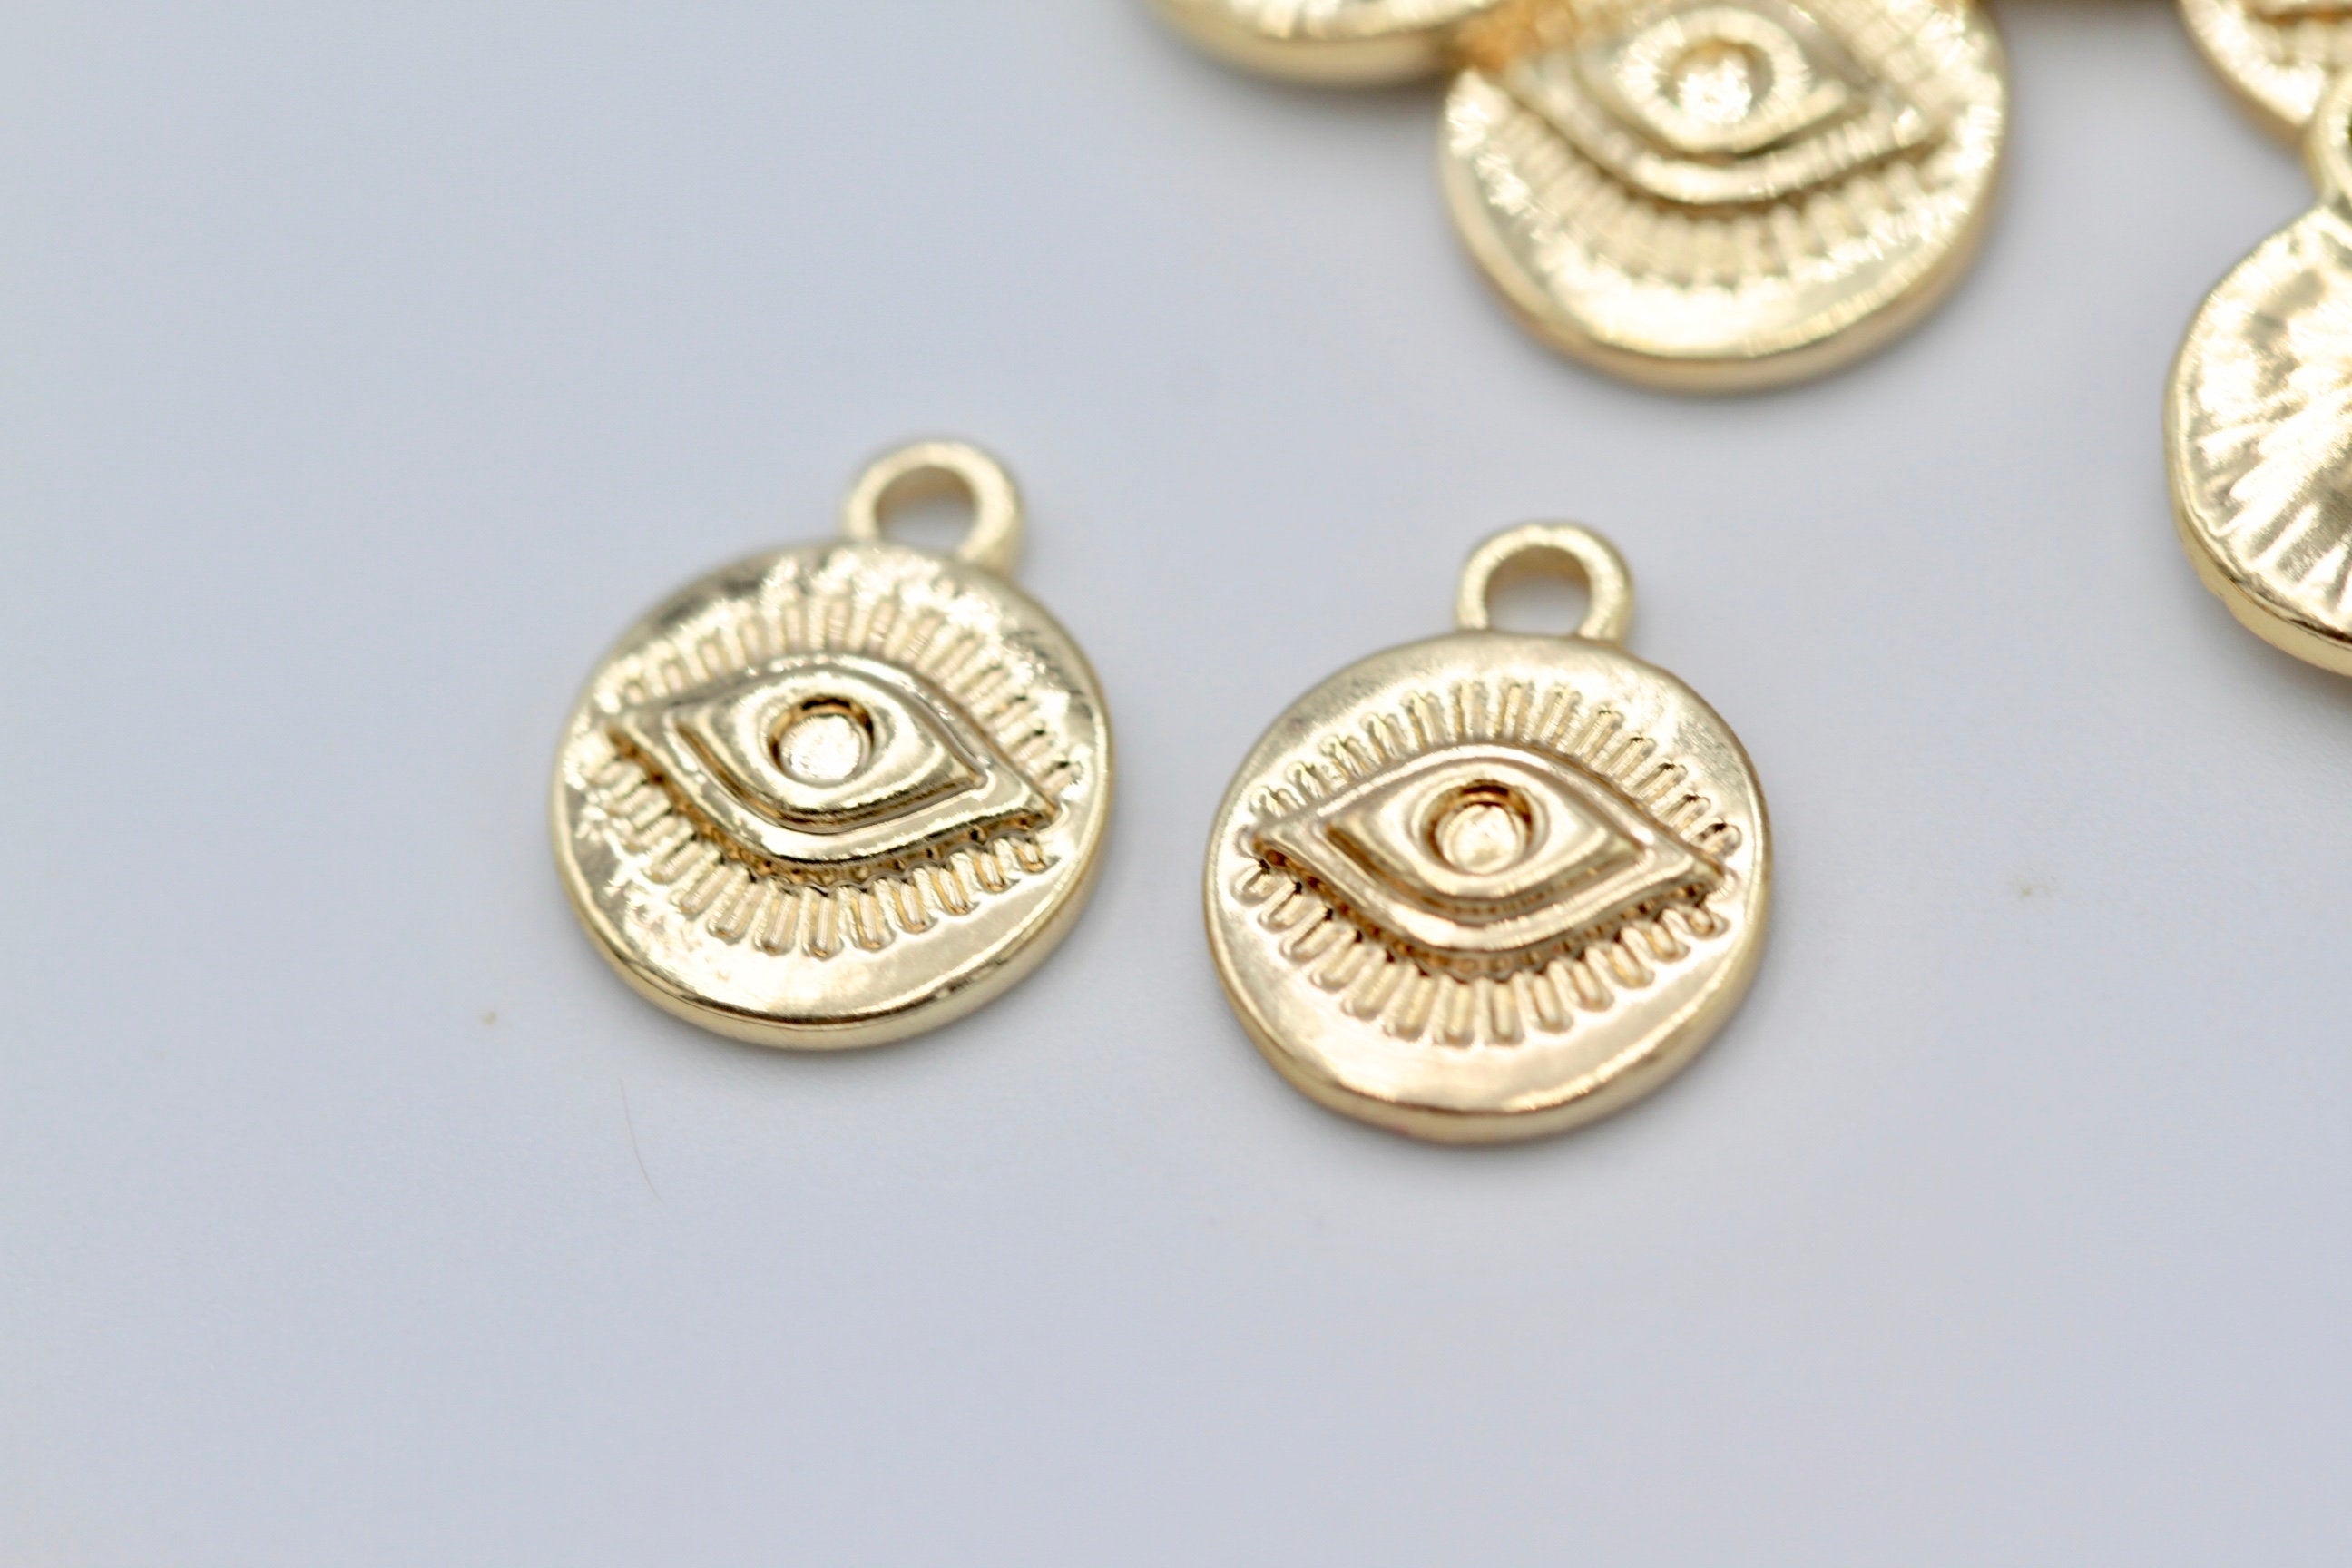 2 pcs, 14mm Zinc alloy Round Eye / Evil Eye Charm in Gold